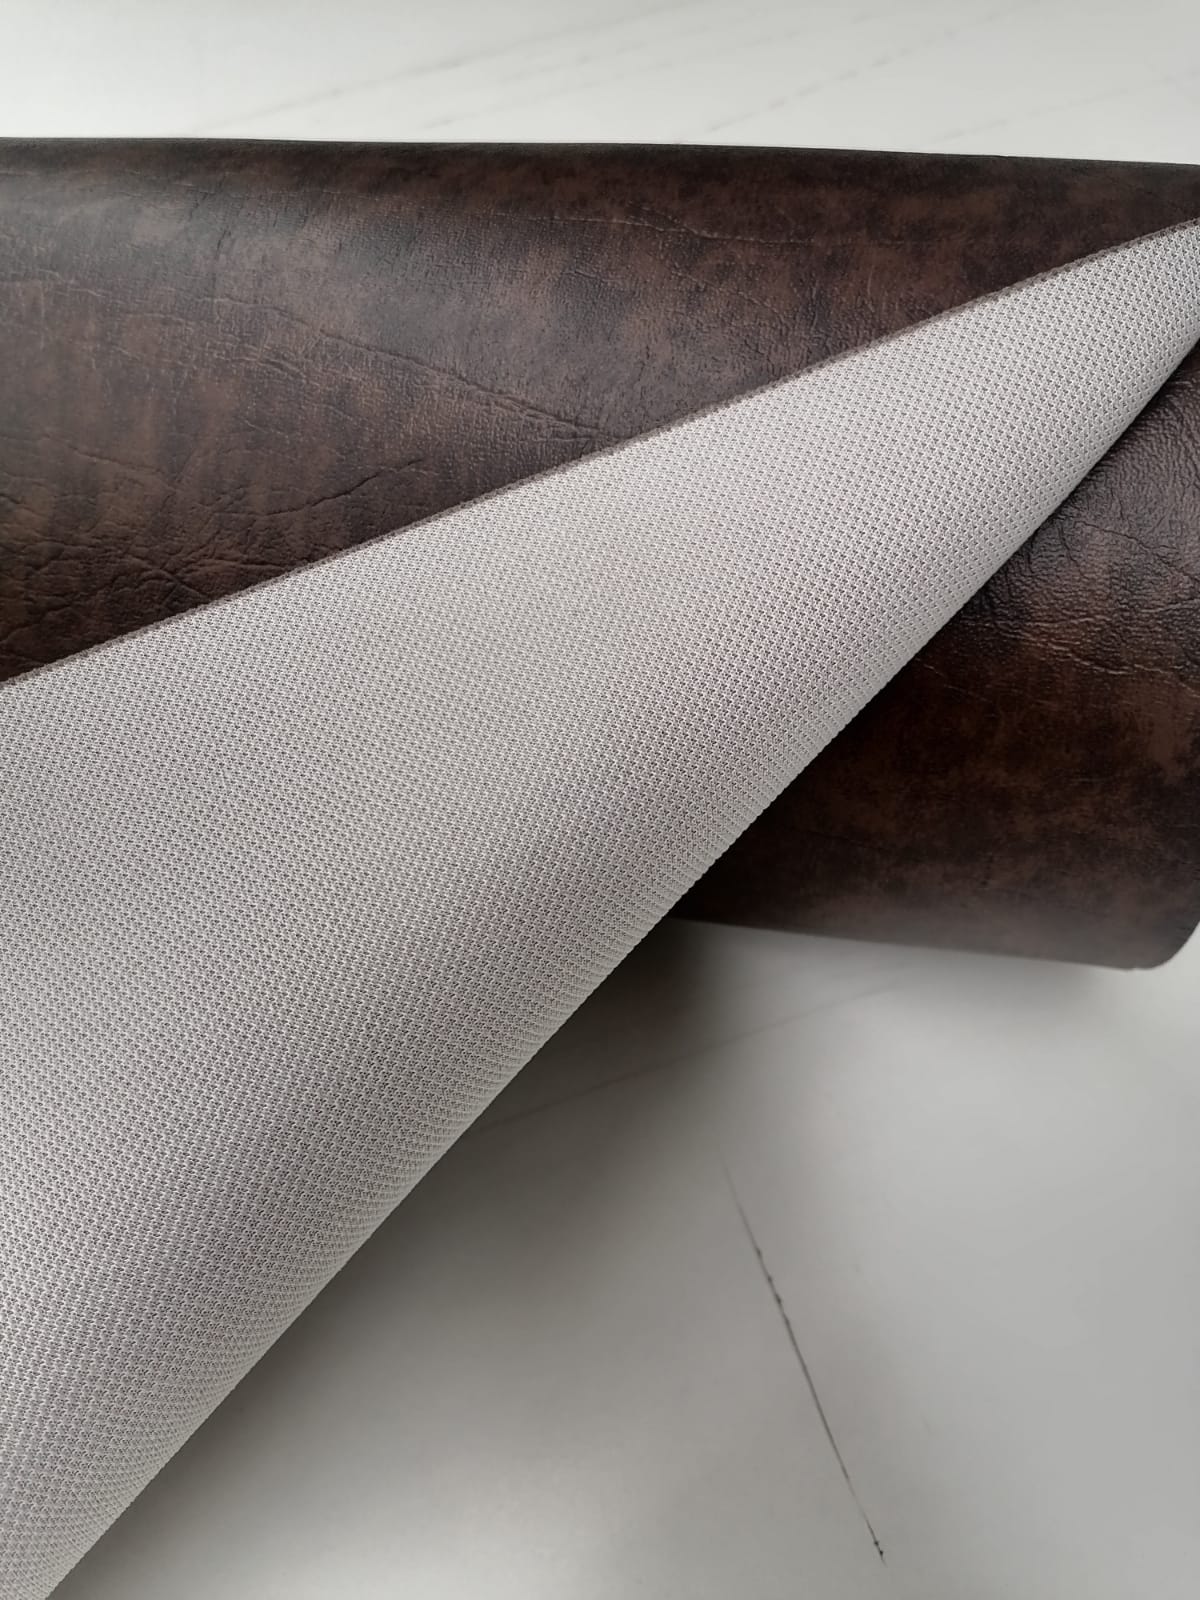 Tokio - Ecocuero tevinil para tapiceria de muebles - Venta por metro ancho 1.4 m